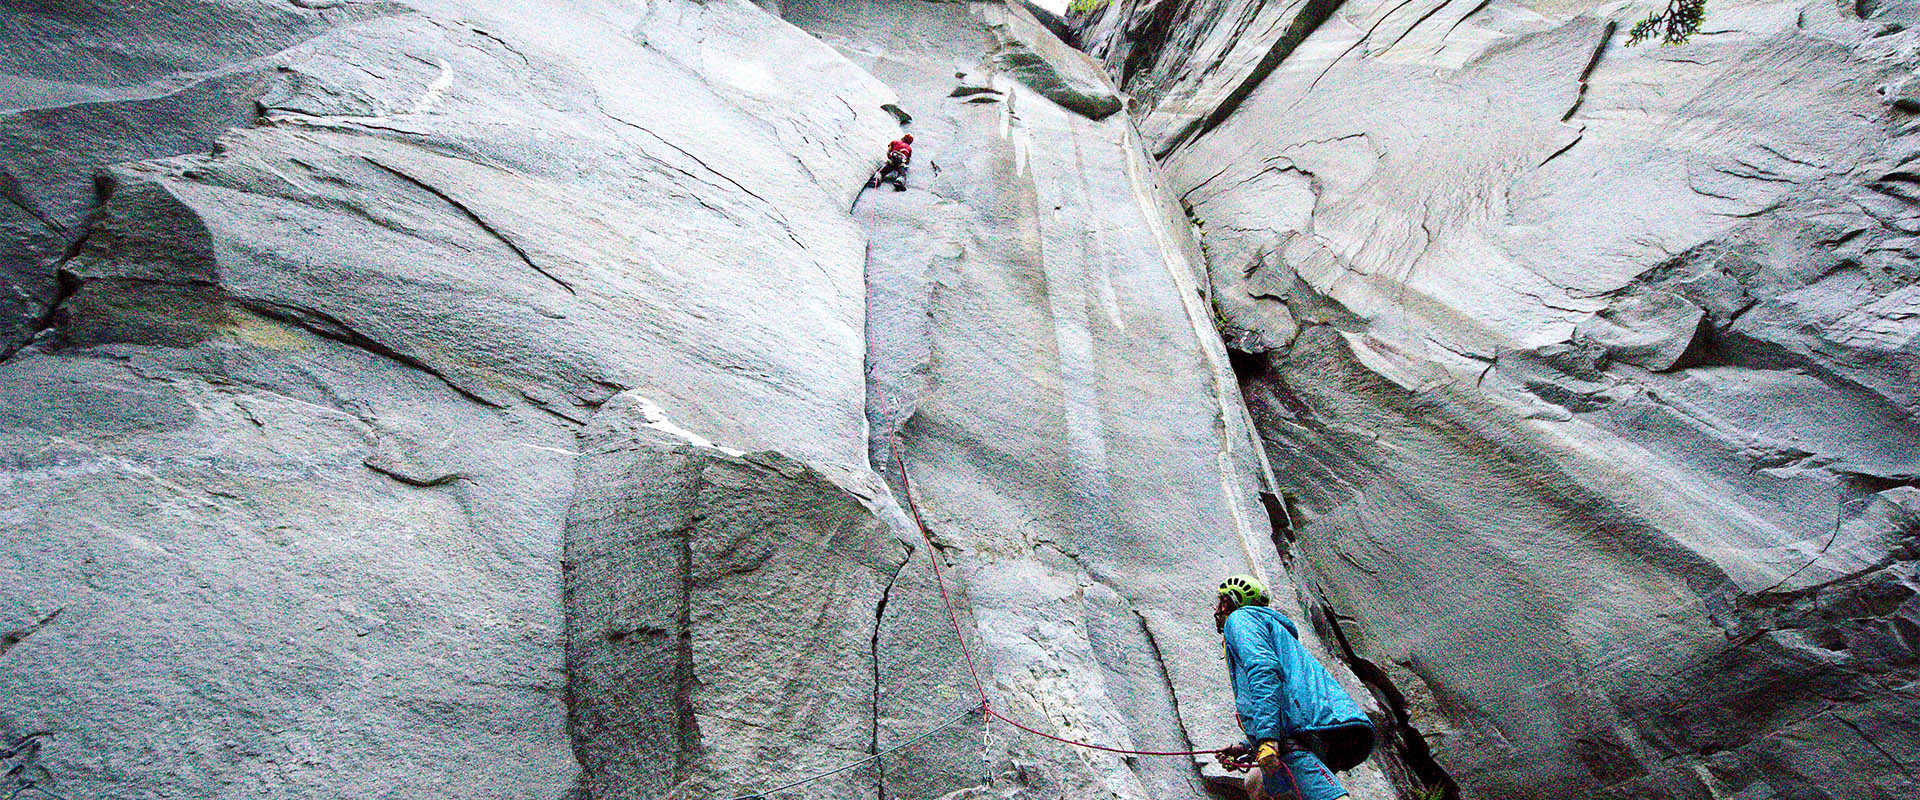 Bergführer und Slackline Wolfgang Reidlinger klettert in Cadarese einen Riss im Granit.